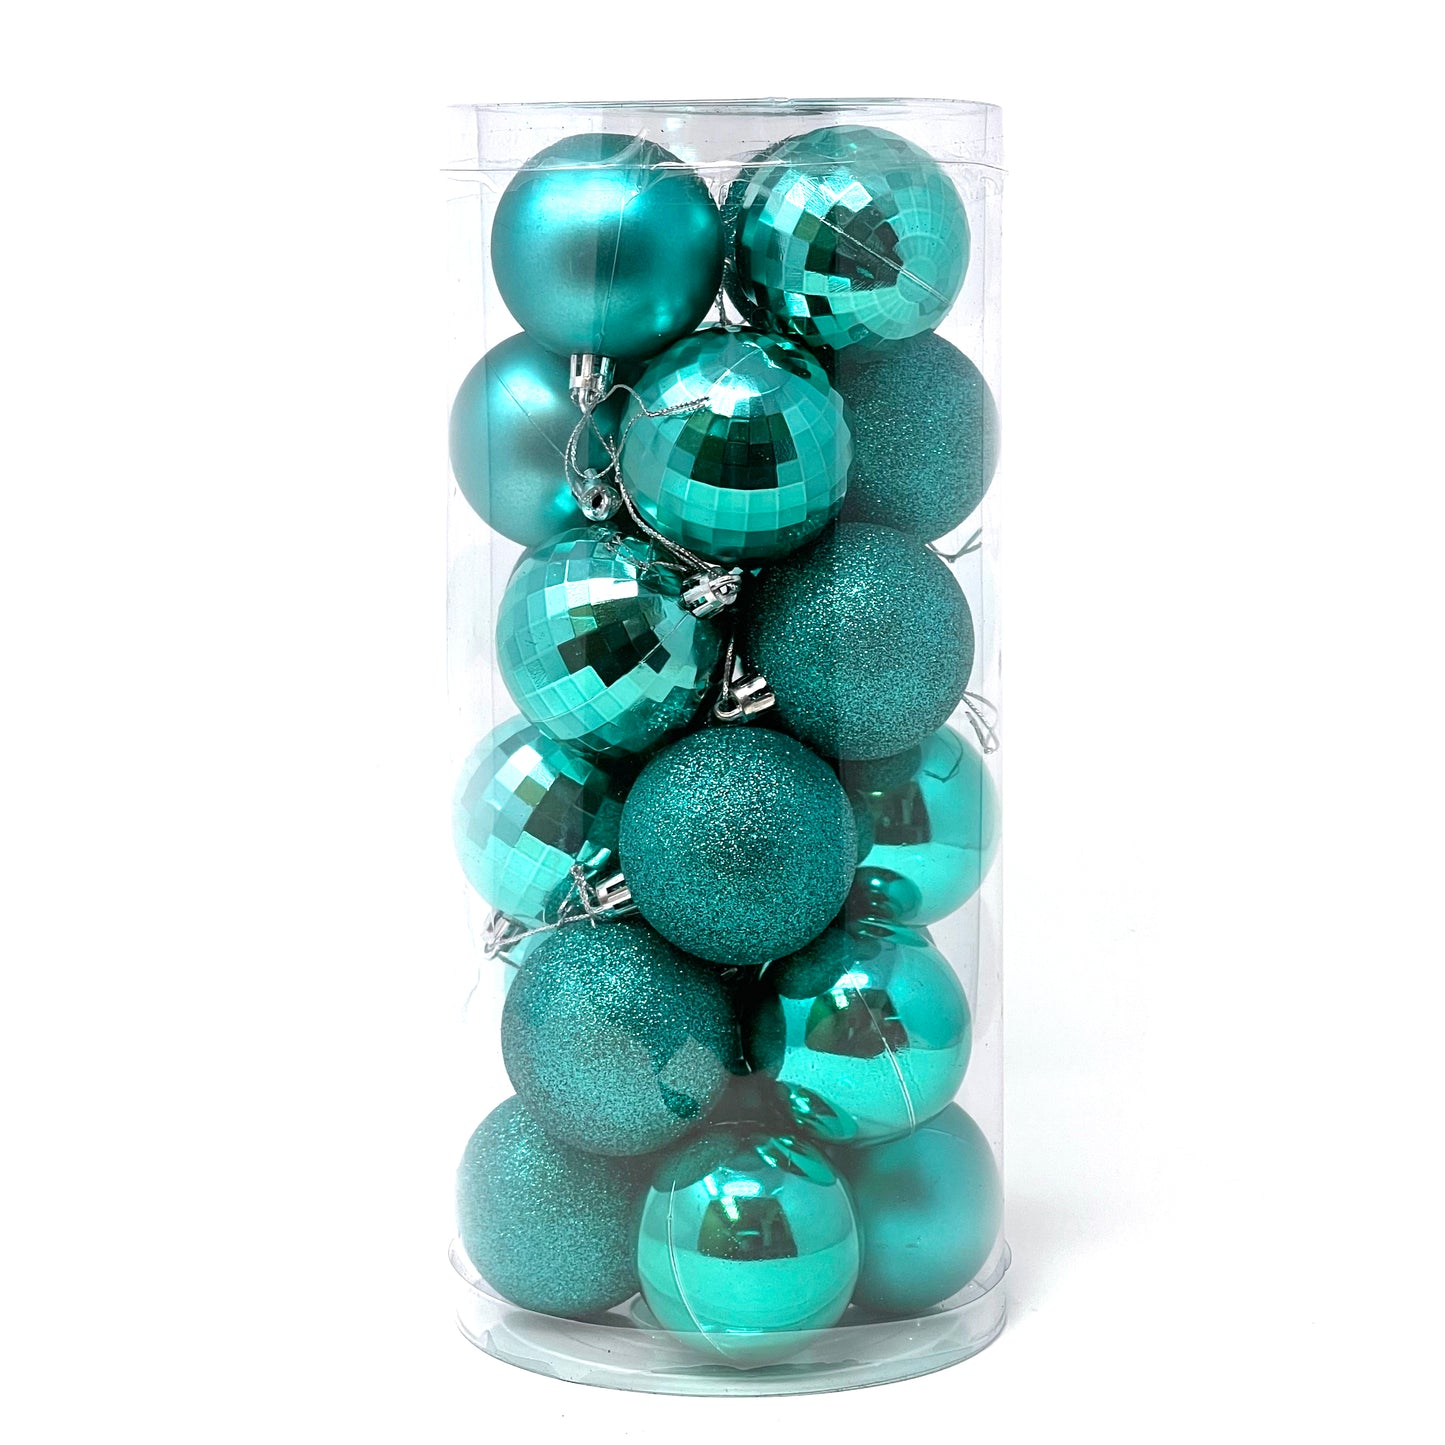 Allgala Christmas Ornament Balls - 24 PK 2.33 Inch (6CM)  for Xmas Tree-4 Style